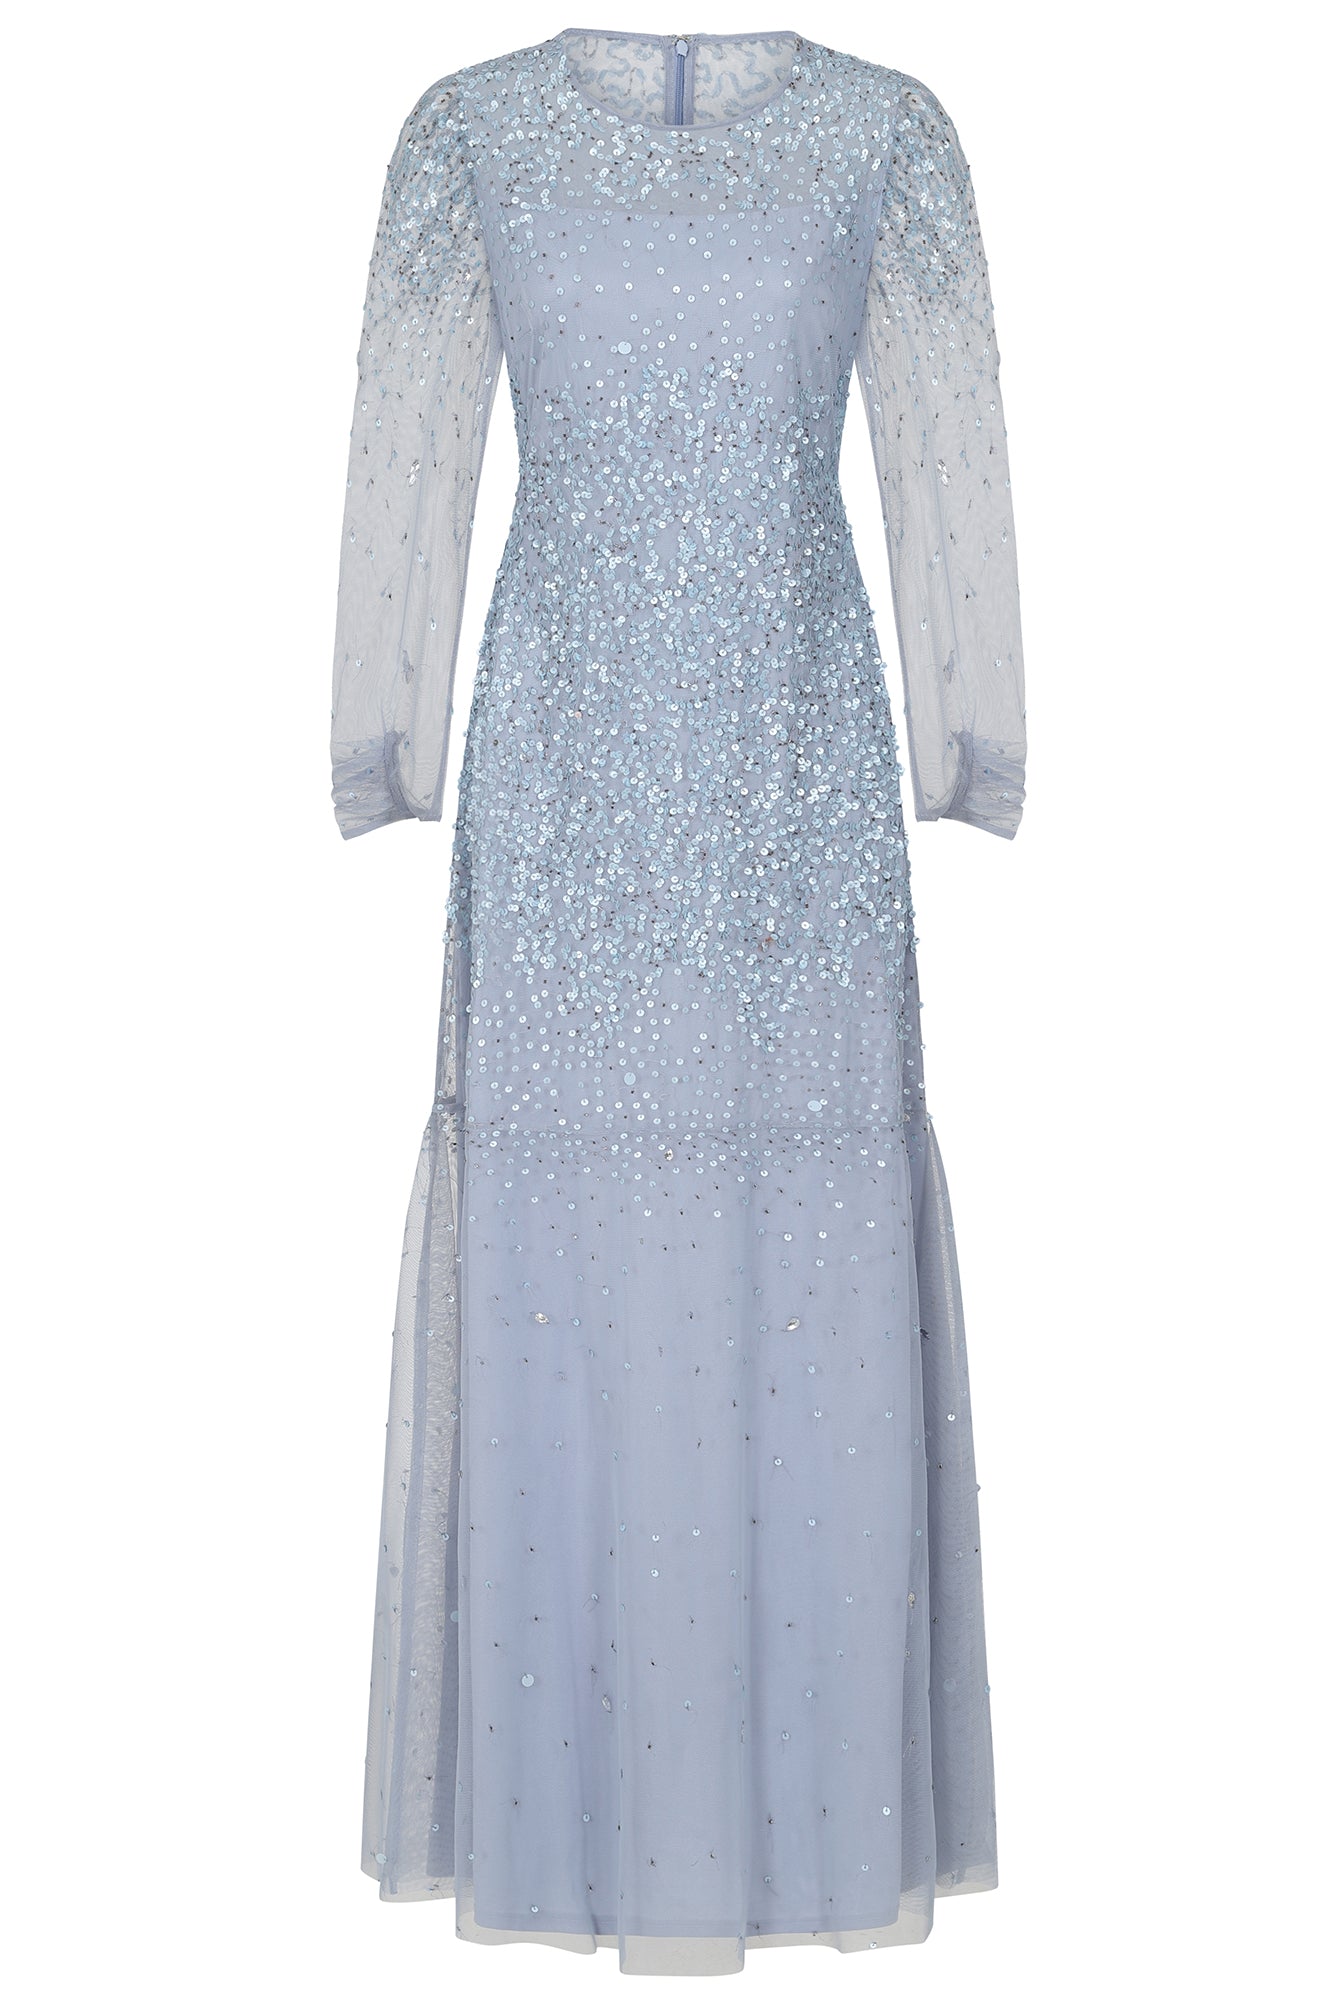 Thread Theory Light Grey/Blue Dress, Women's Fashion, Dresses